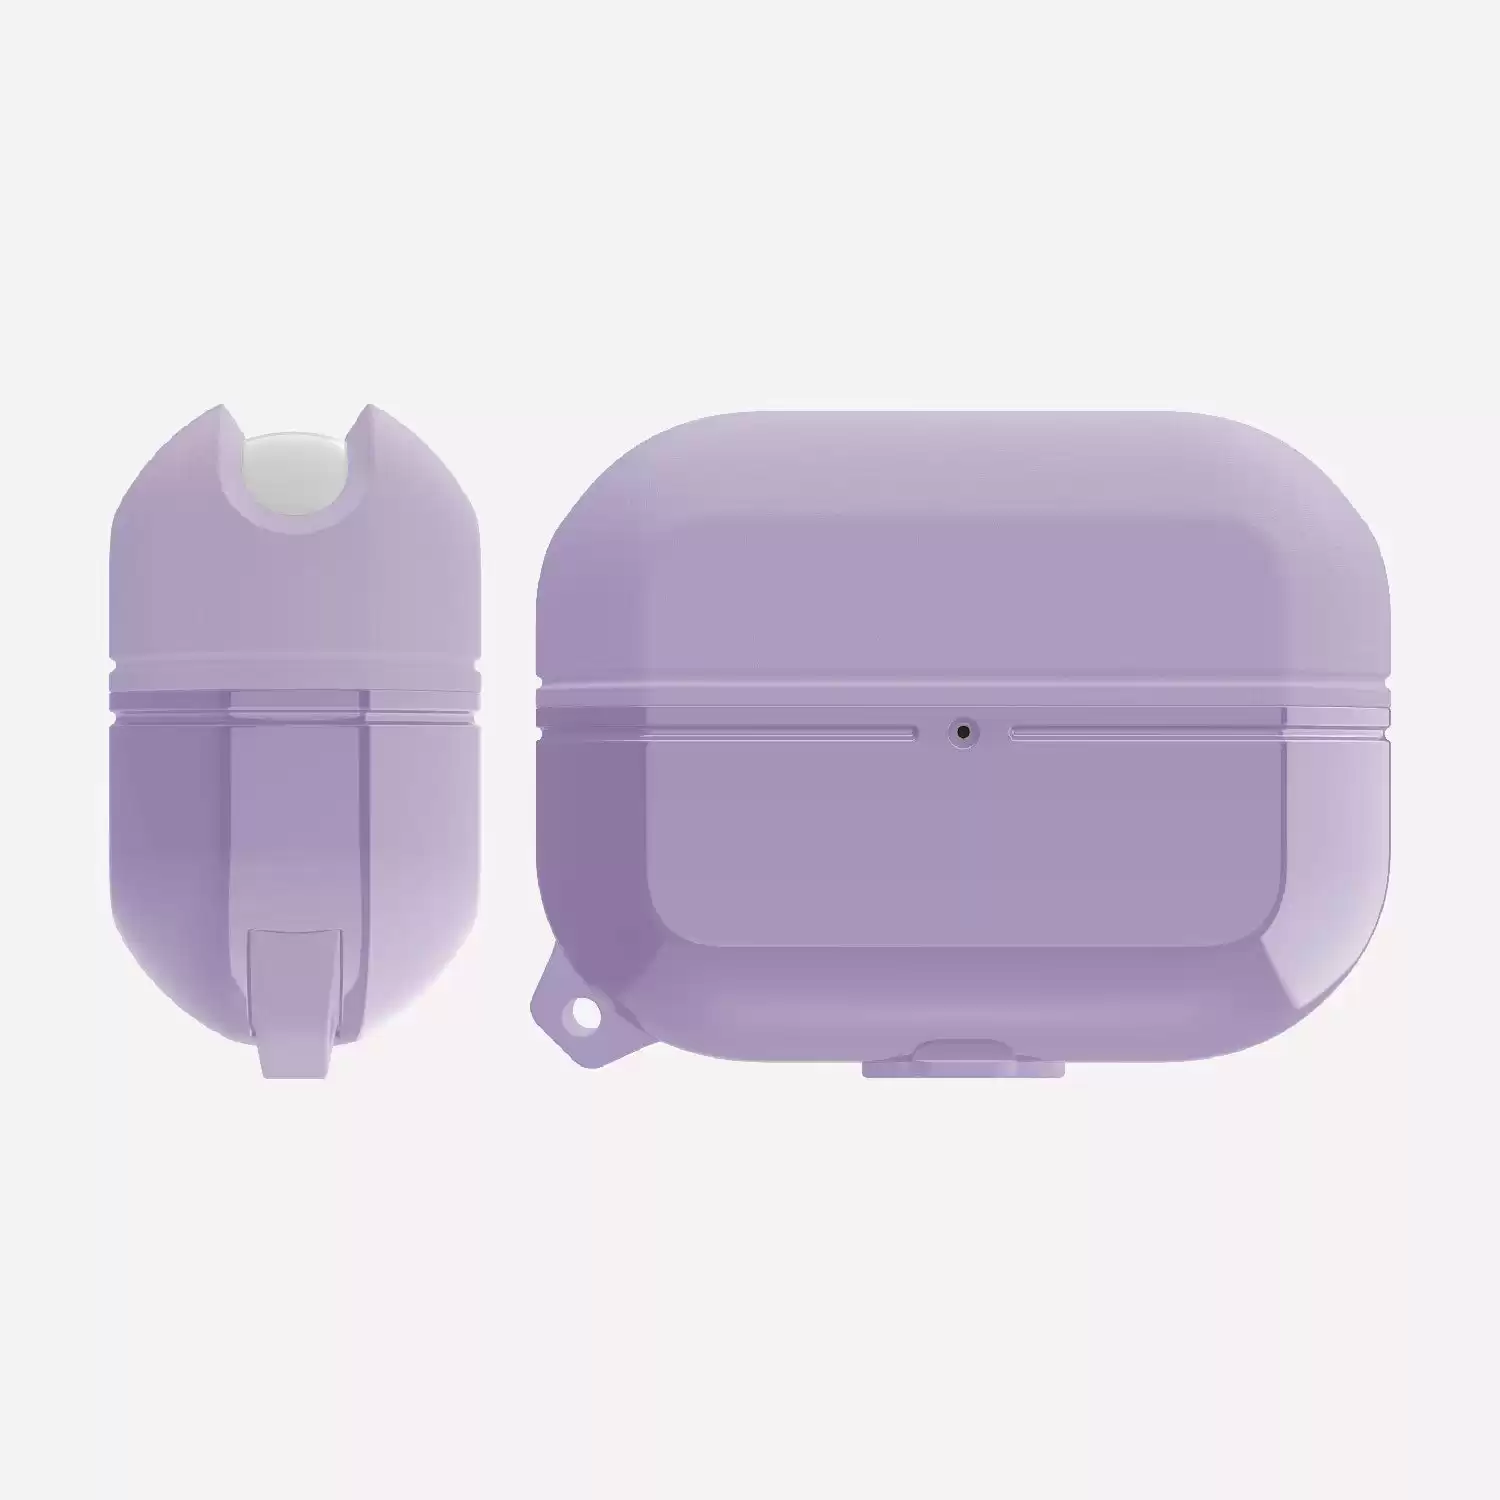 Apple-AirPods-pro-case-raptic-journey-purple-488204-4_1800x1800